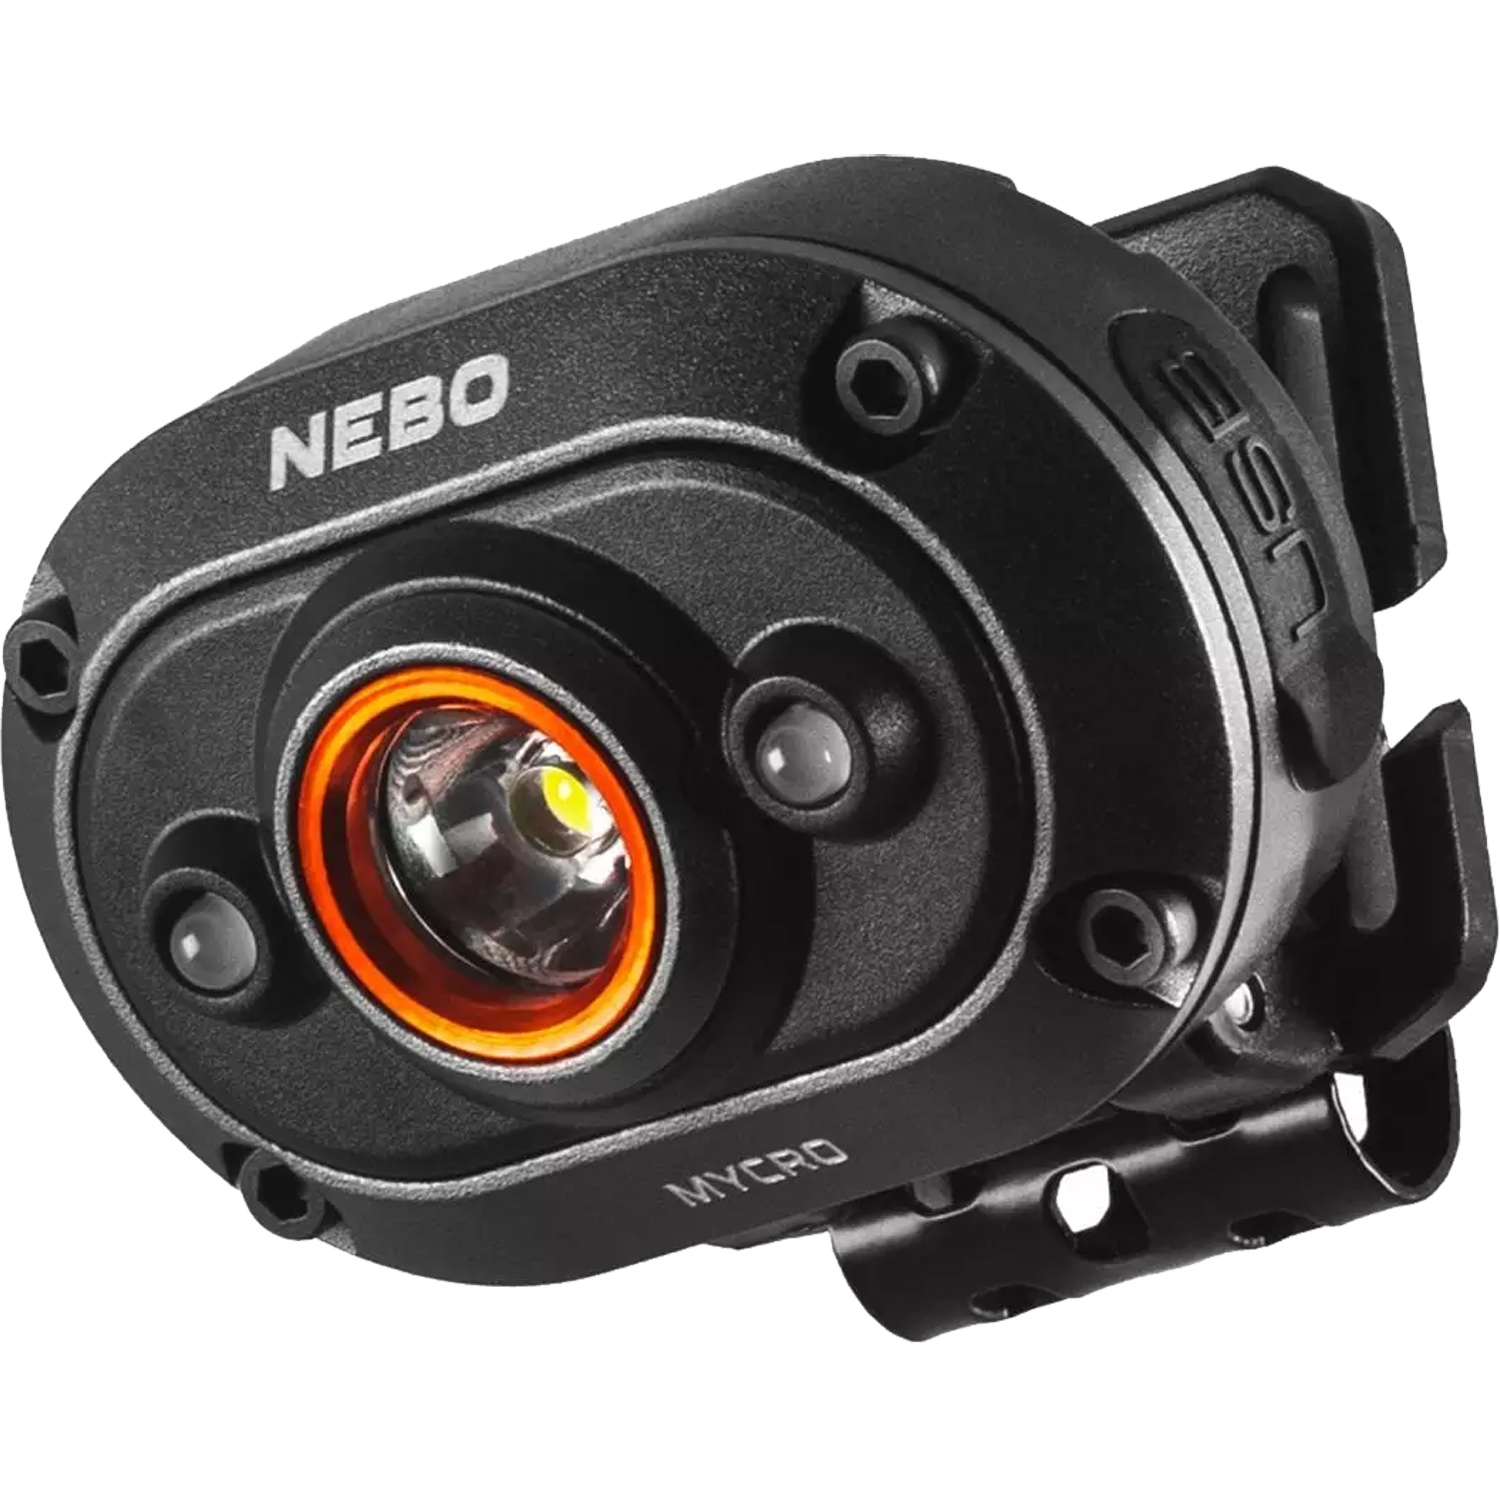 Nebo Mycro Head Torch Headlamp 400 Lumen Rechargeable Waterproof 